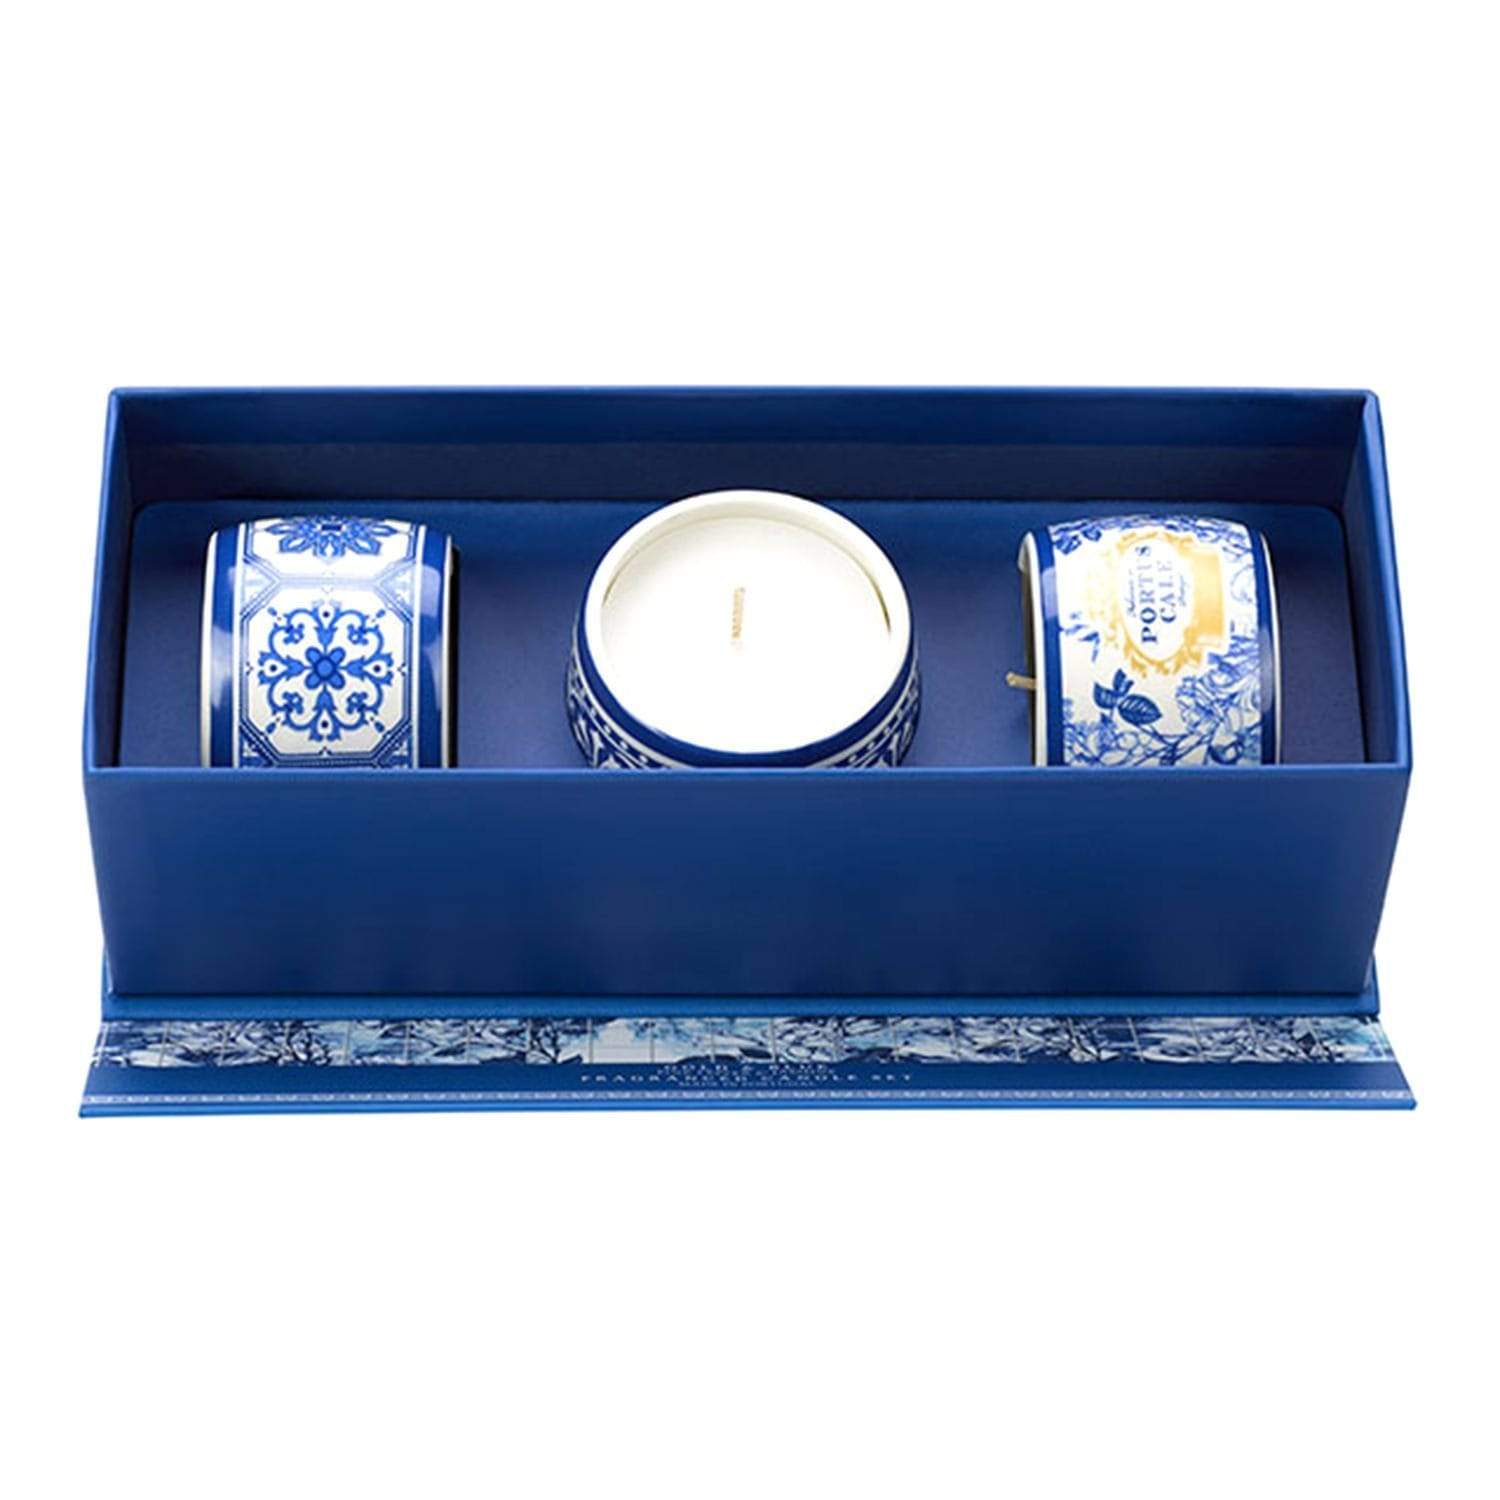 Castelbel Portus Cale Gold and Blue Tea Light Candle Gift Set - C2-2326 - Jashanmal Home